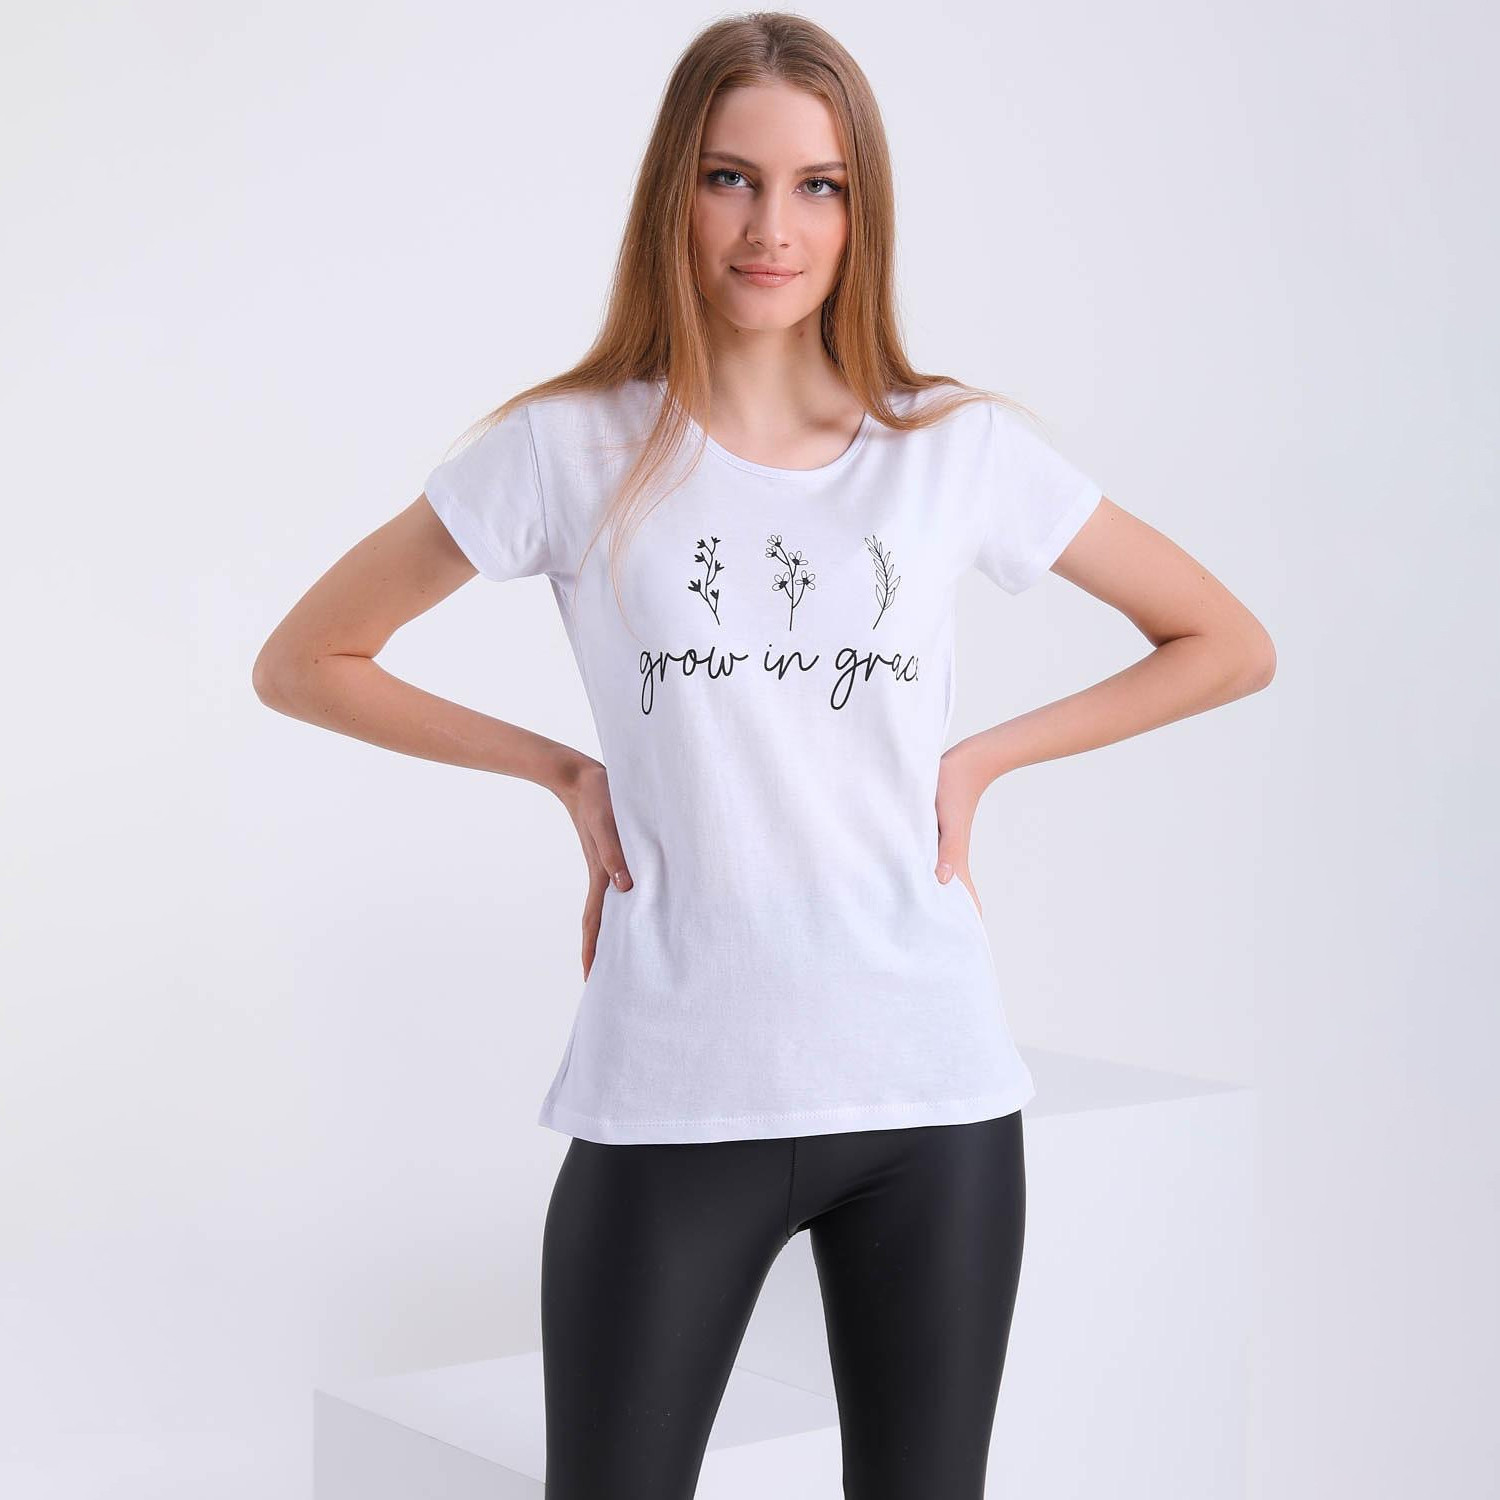 5054-10 Kafkame БЕЛАЯ футболка женская с принтом (4 ед. размеры : S.M.L.XL)